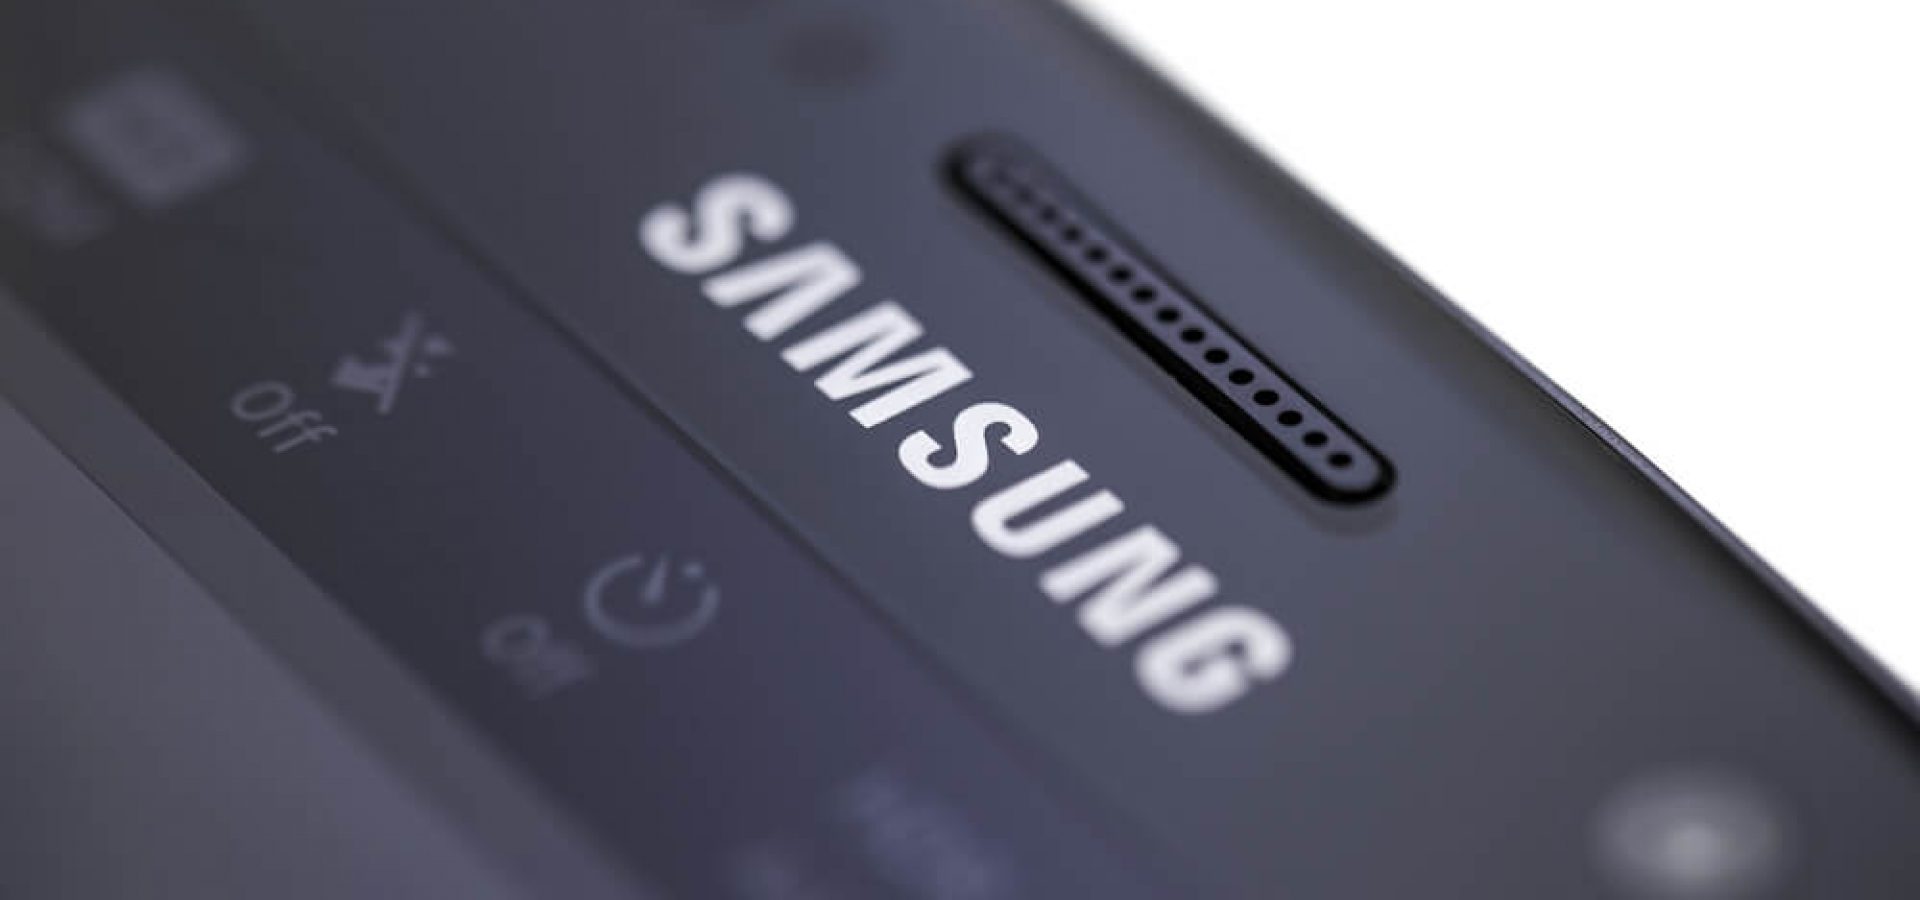 Photo detail of Samsung phone.